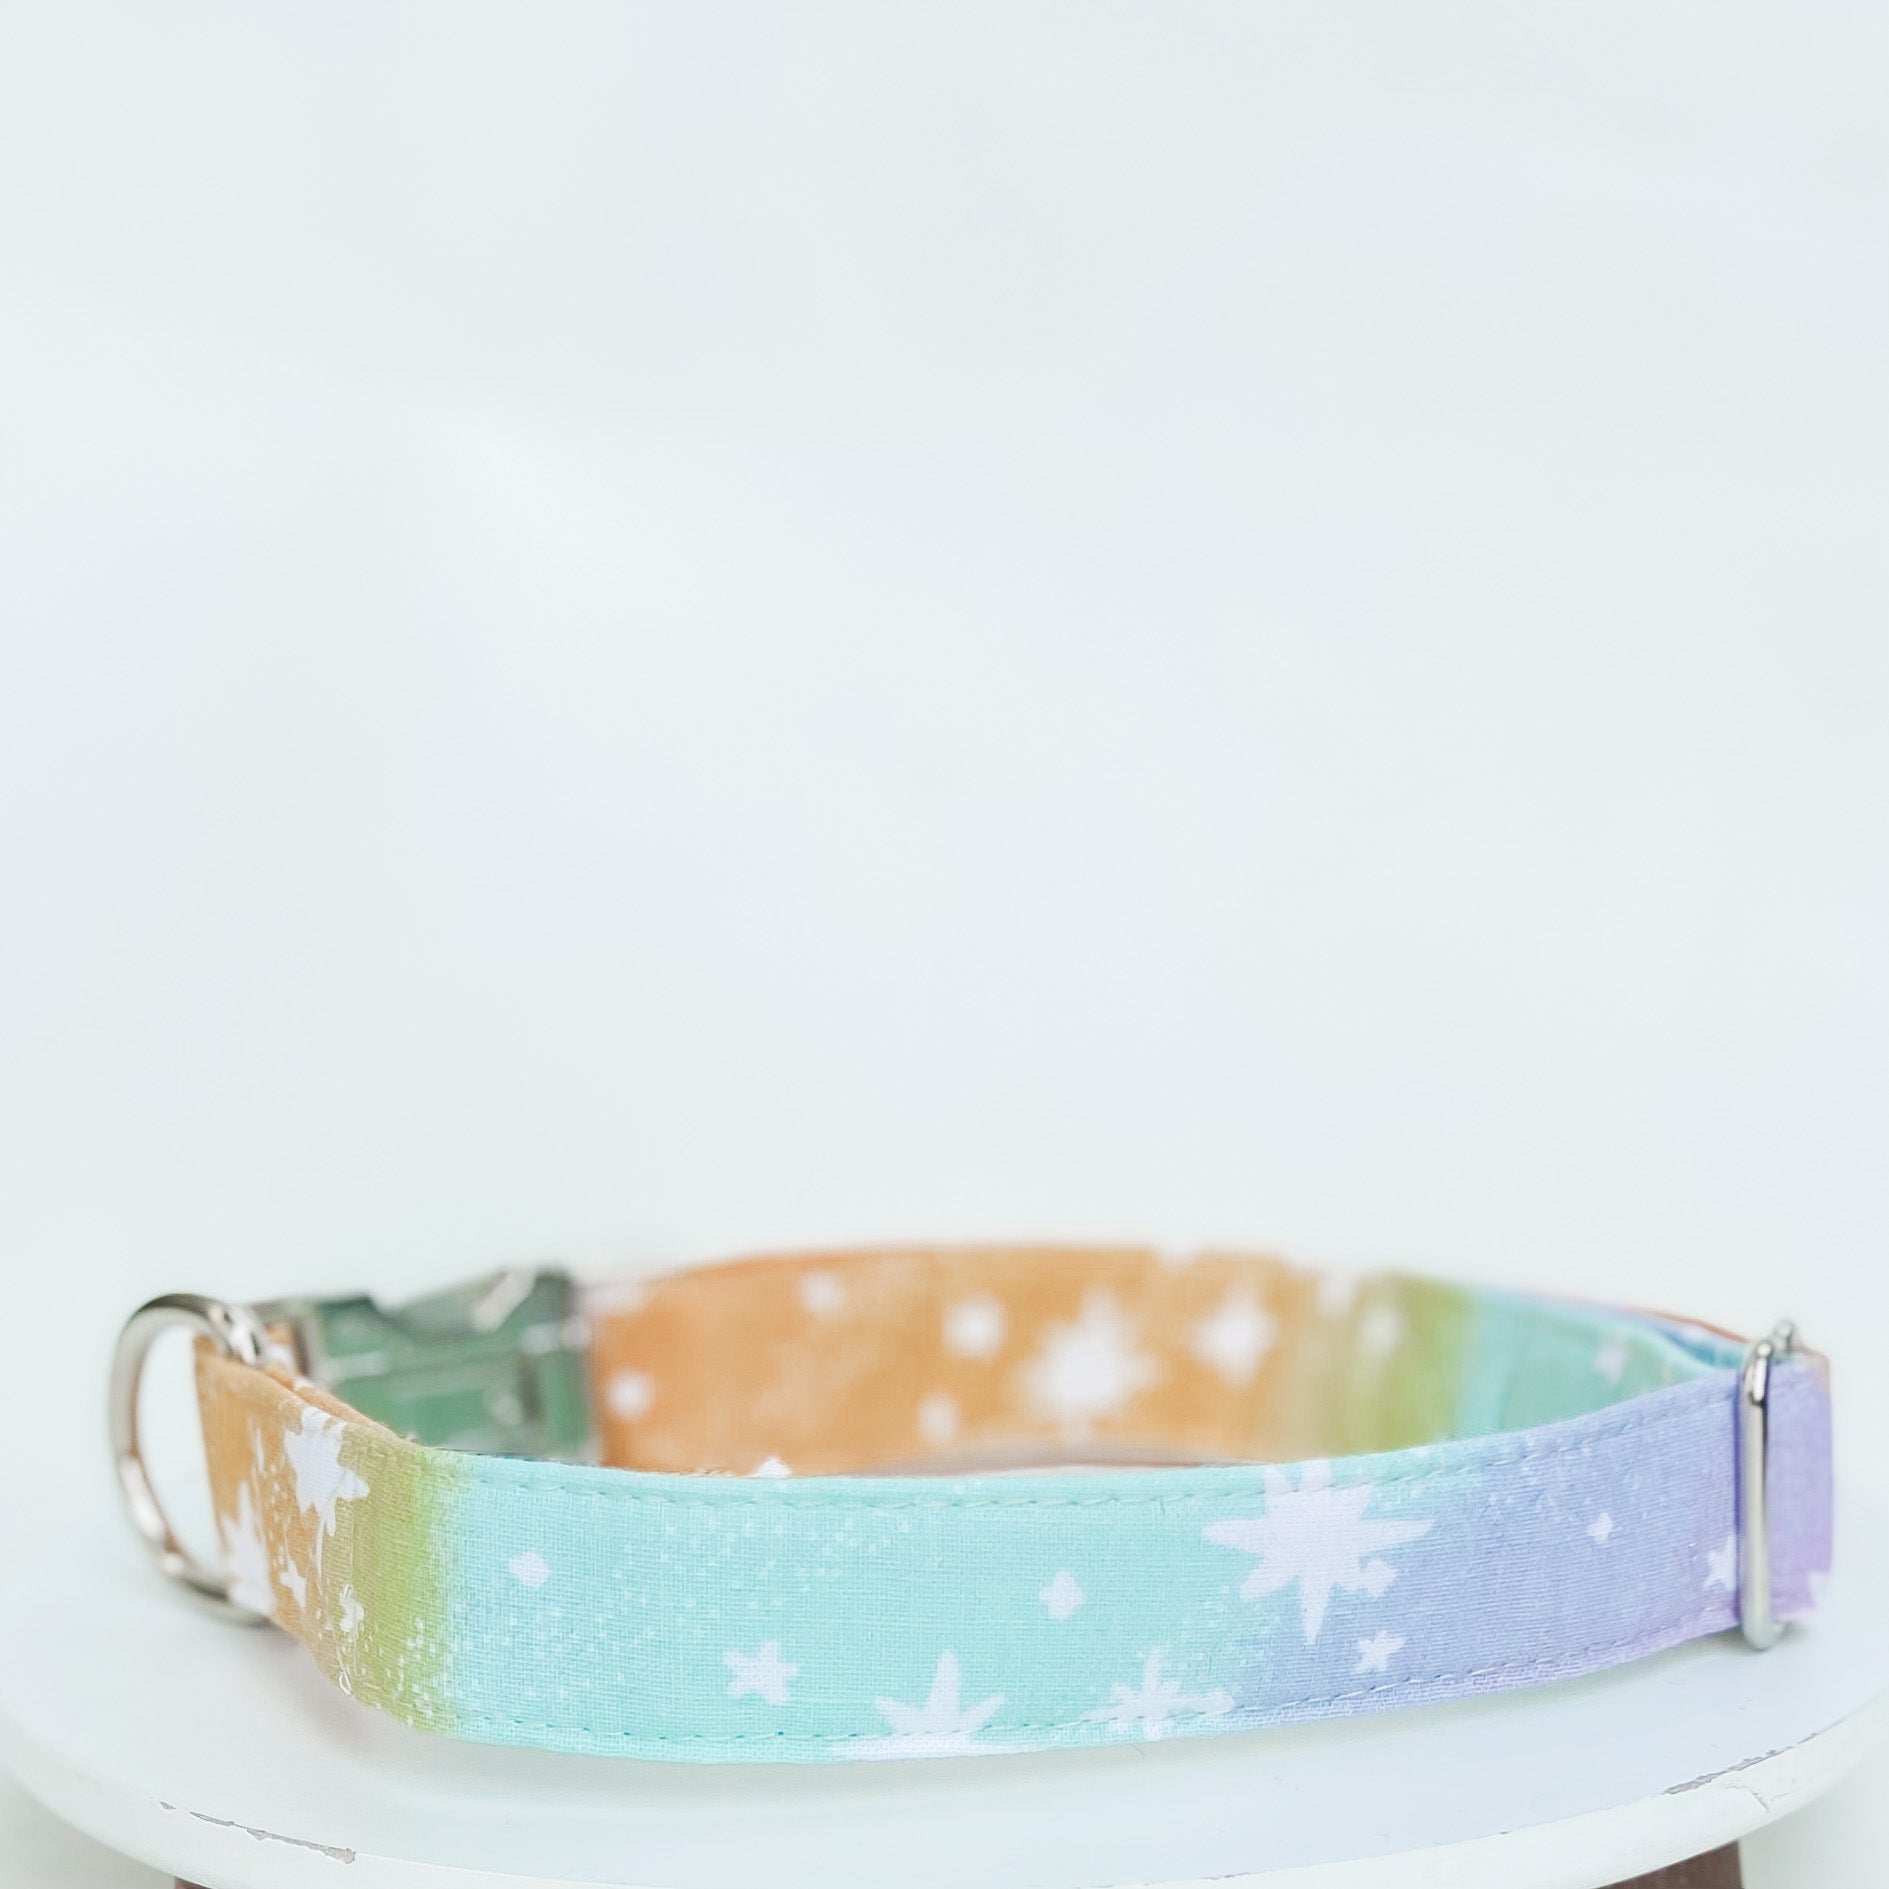 Retro pastel galaxy dog collar with silver hardware